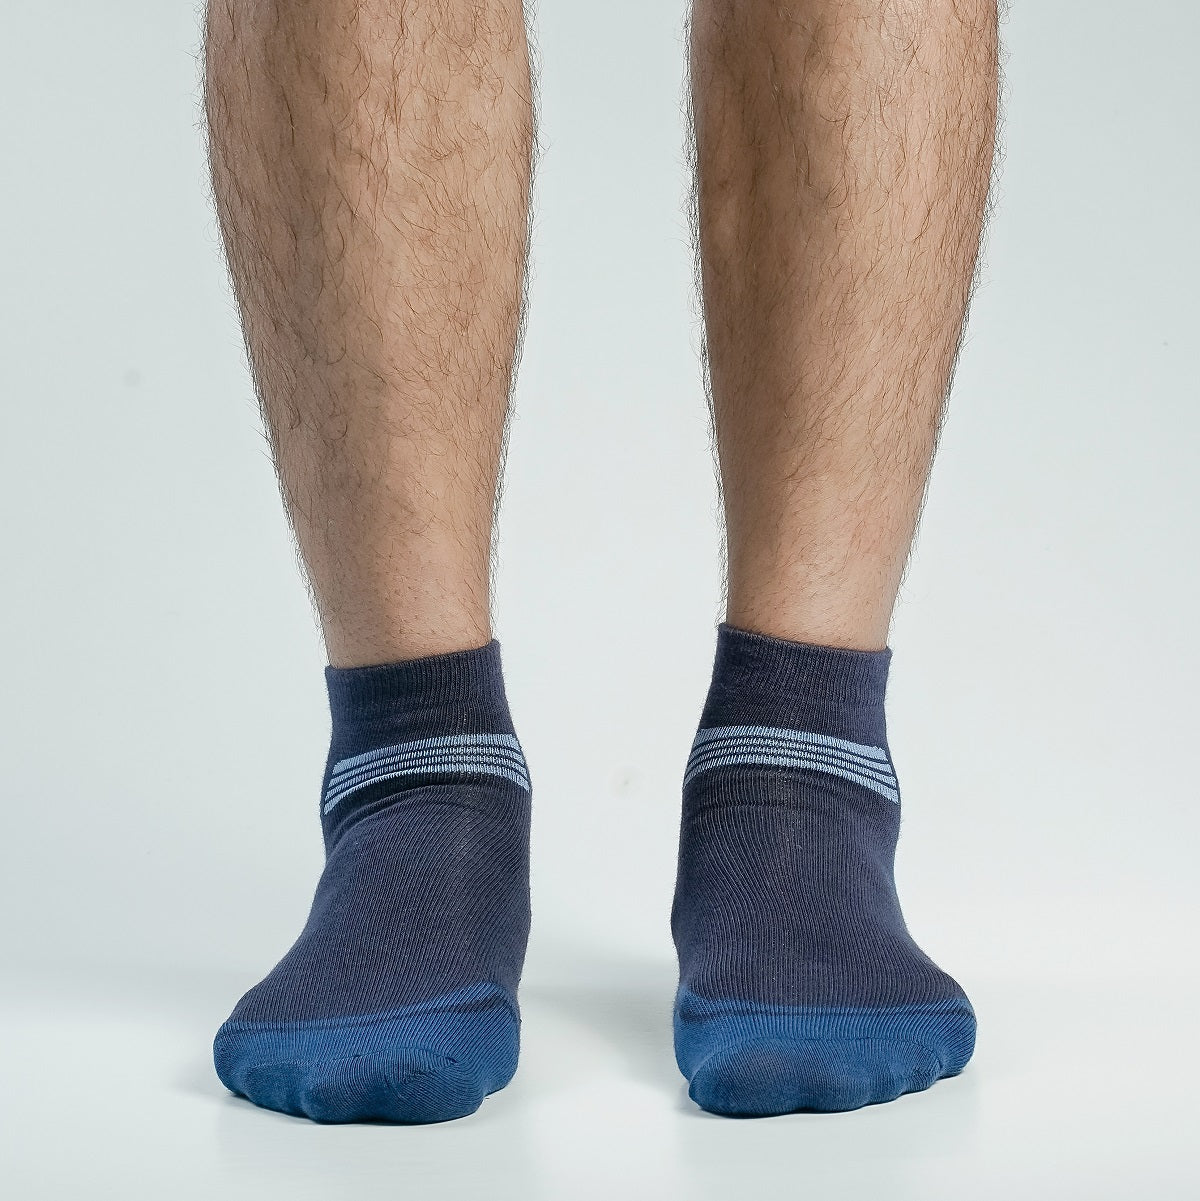 X Club Ankle Socks For Men